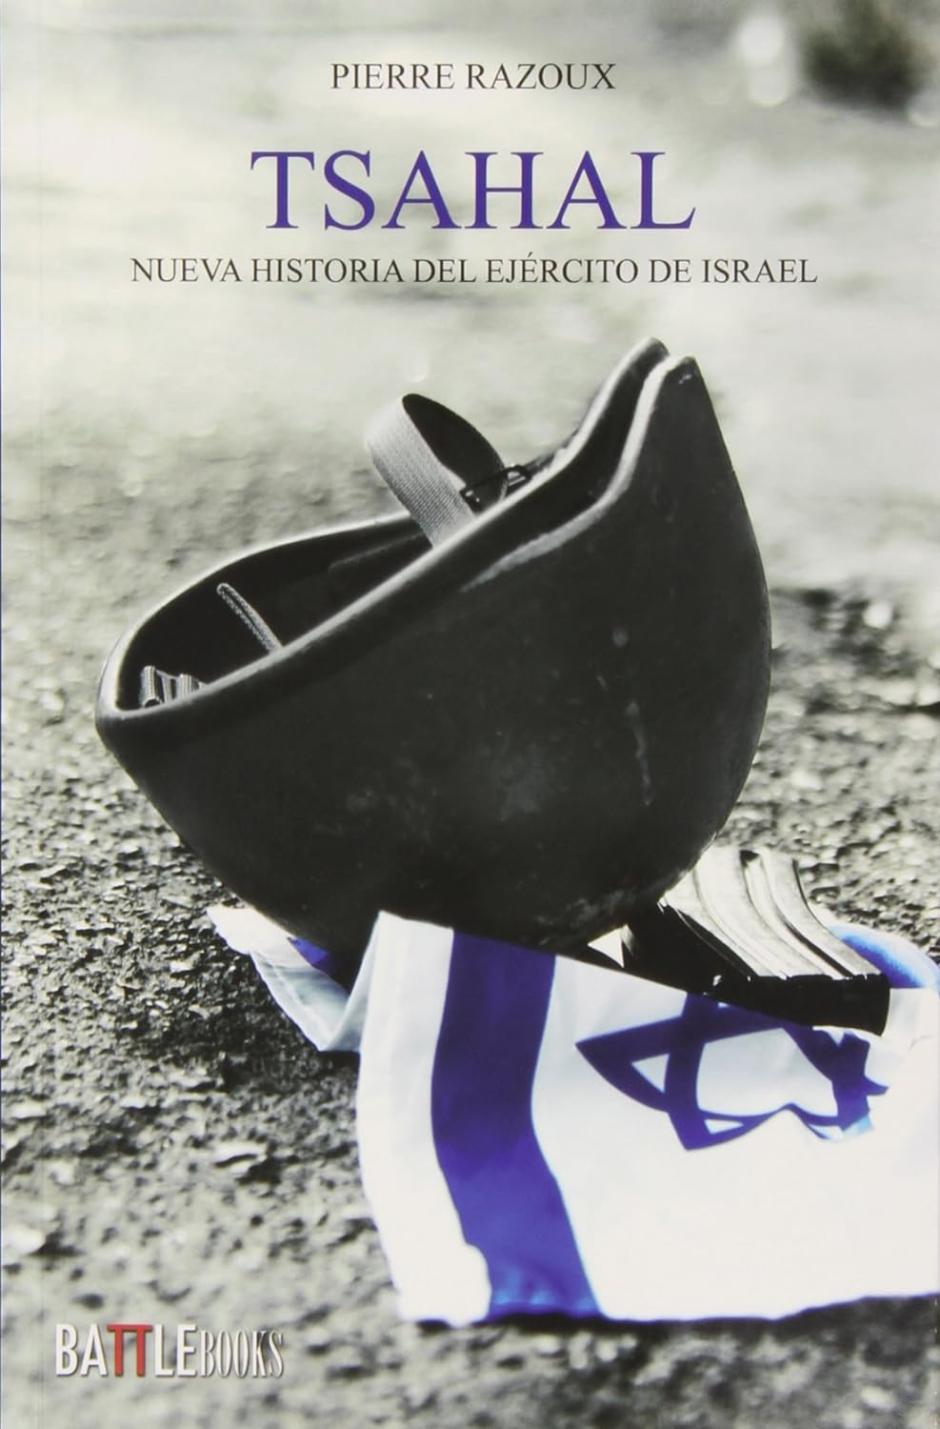 Portada del libro 'Tsahal, nueva historia del Ejército de Israel'